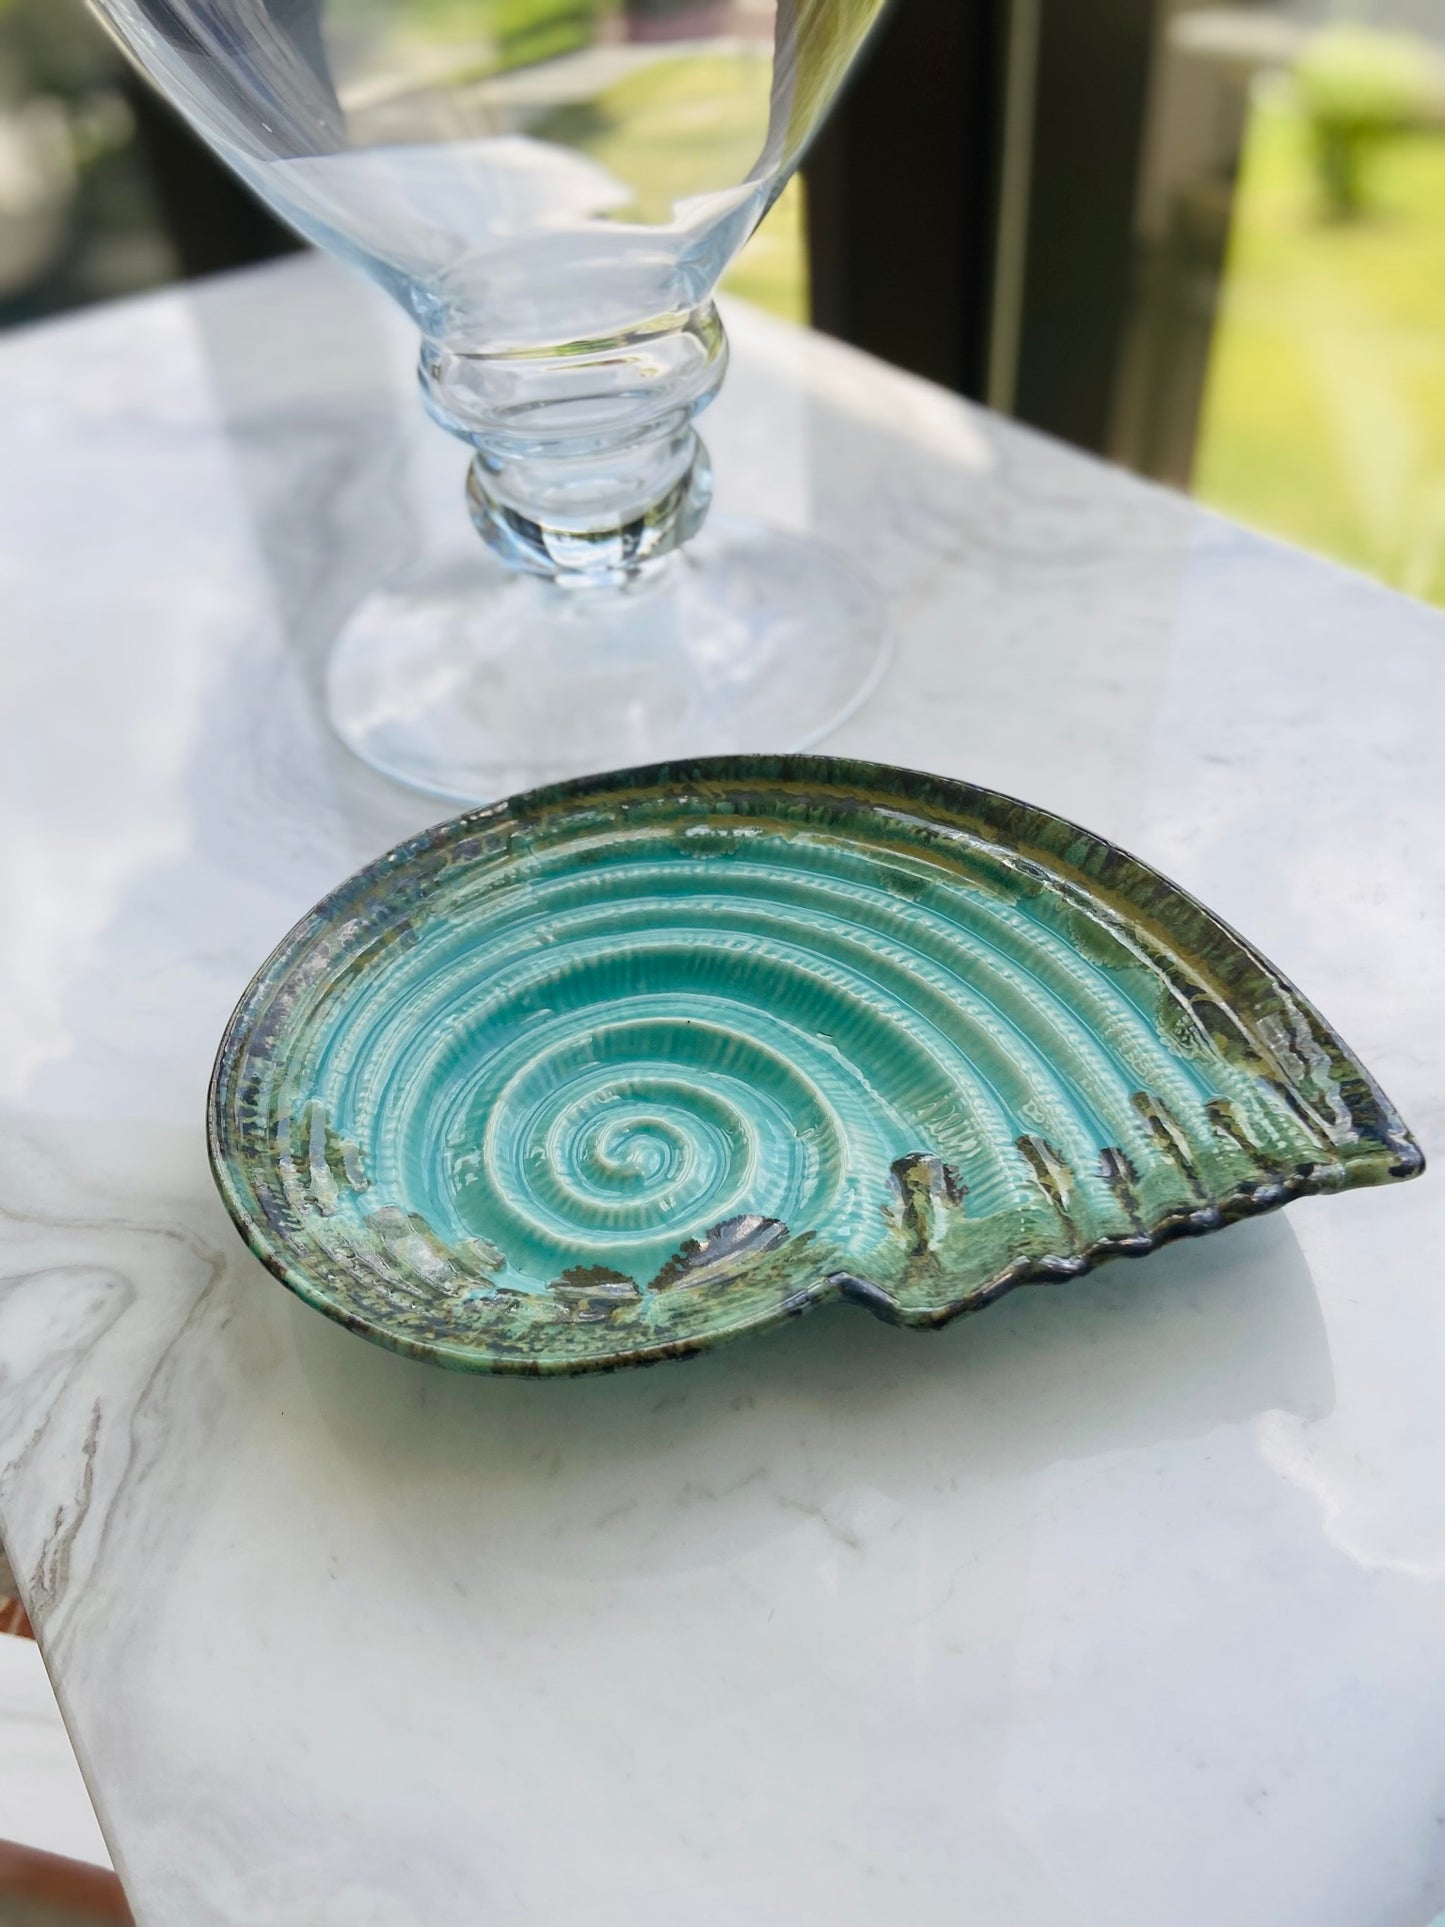 Shell Platter - Green with Gray Border l Gulchandani Ceramic Shell l Lemongrass Exclusive Ceramic Shell Serving Platter l